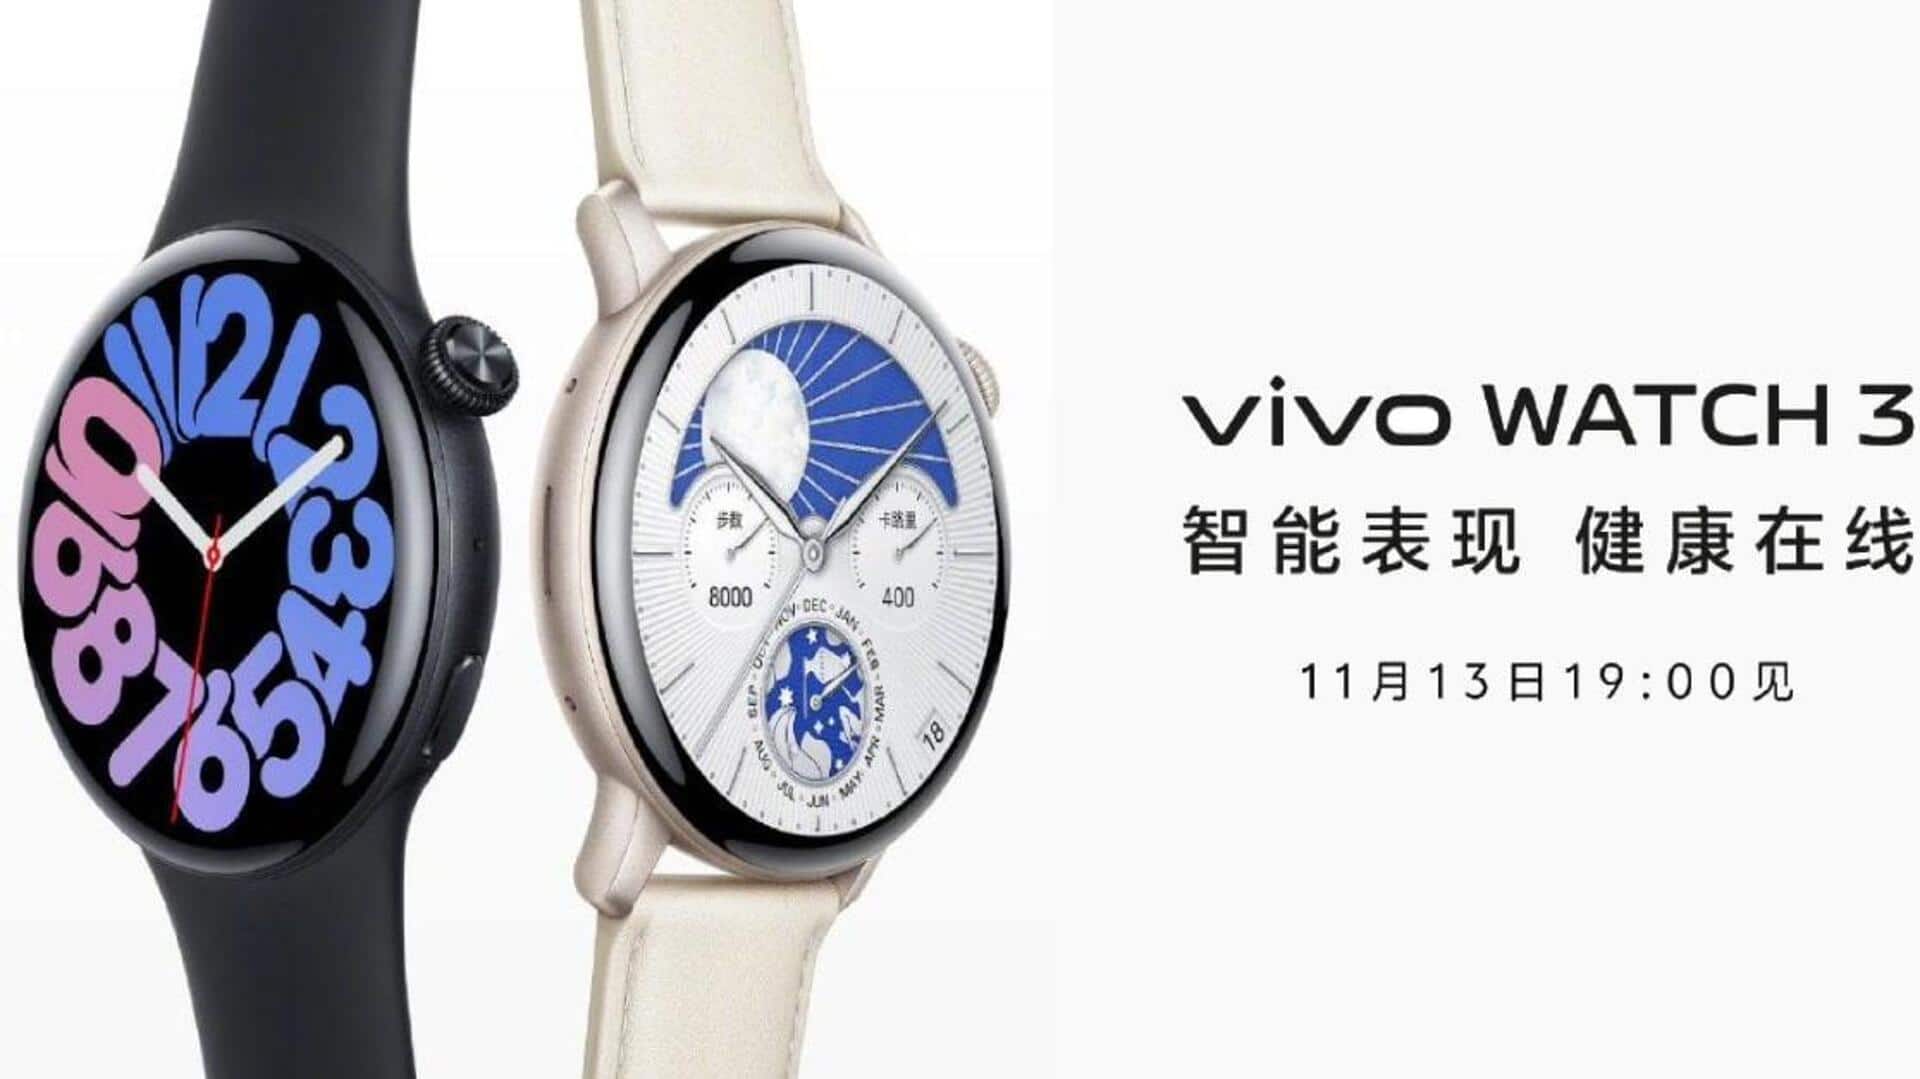 Vivo Watch 3 revealed ahead of November 13 launch